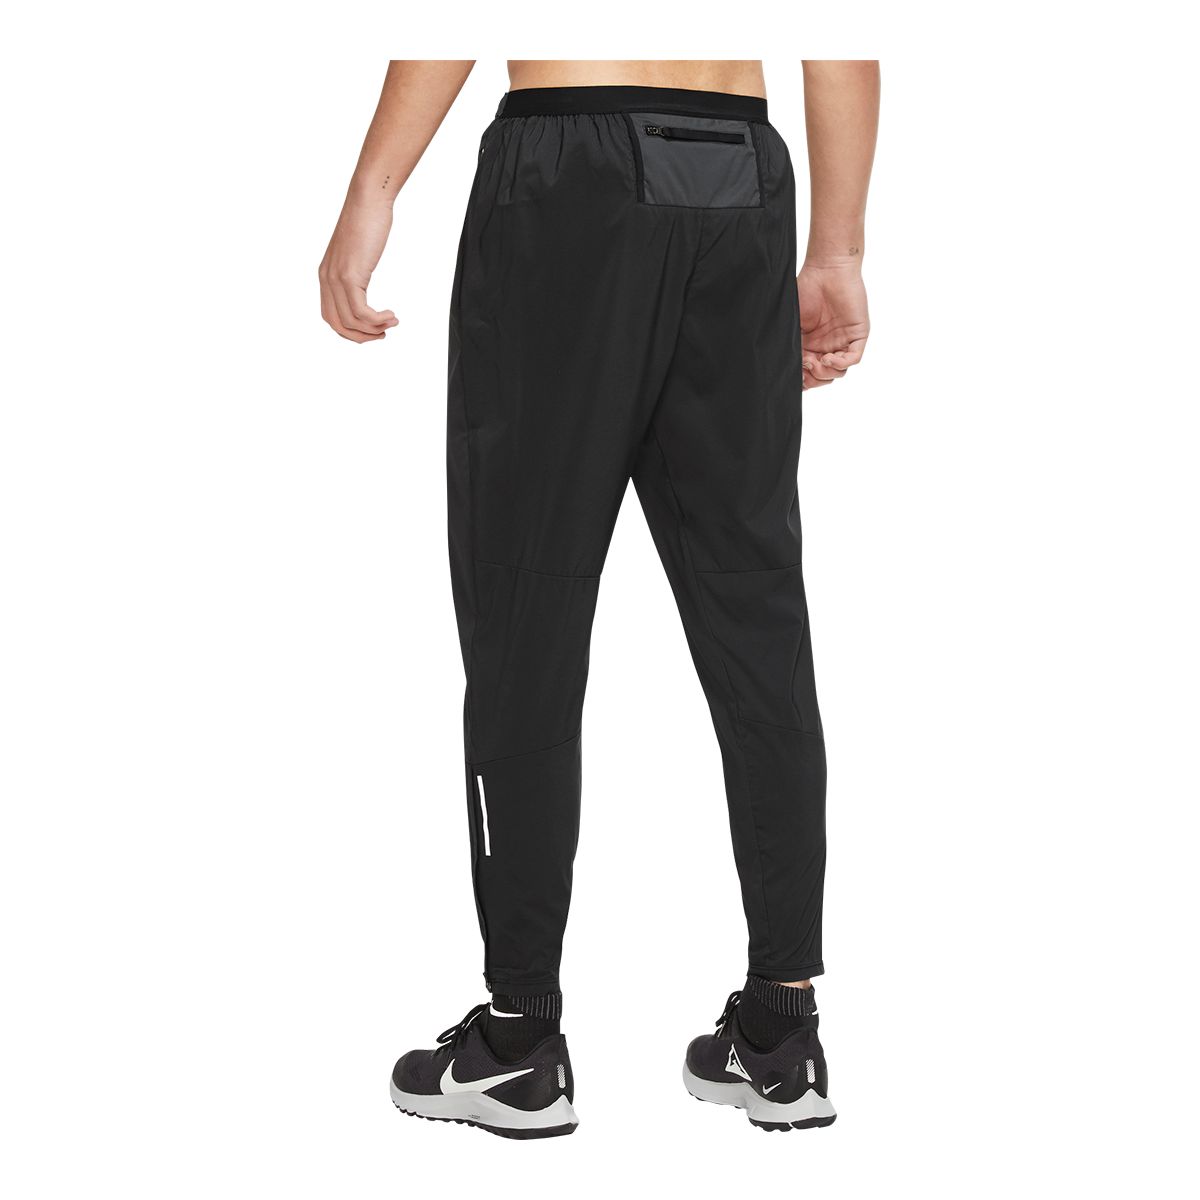 Nike dri fit active leggings mesh calf detailing XL crop black drawstring